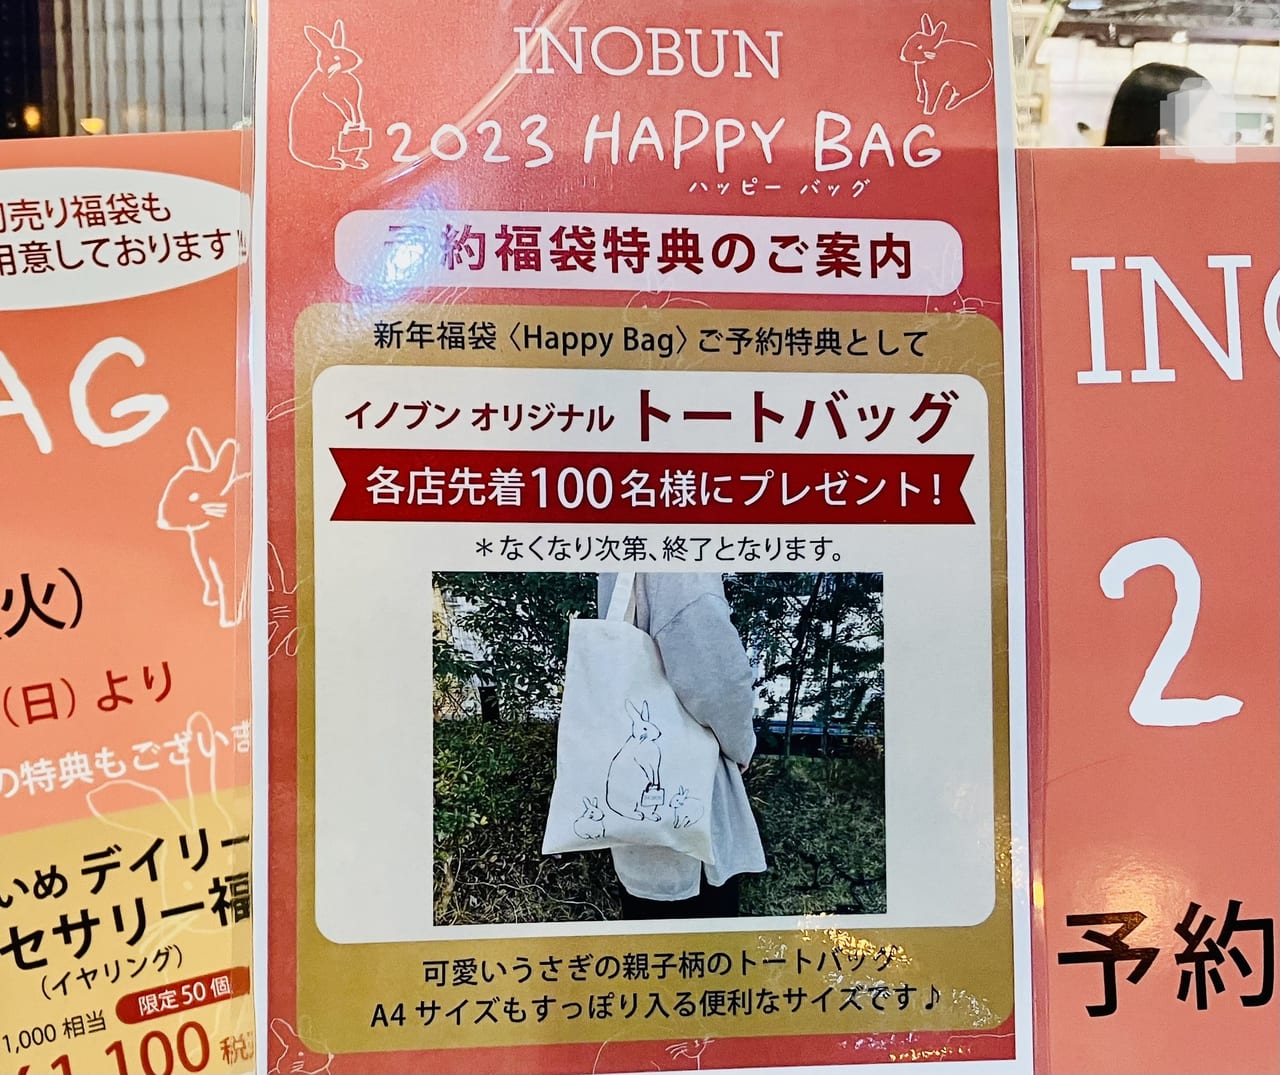 inoubun bag